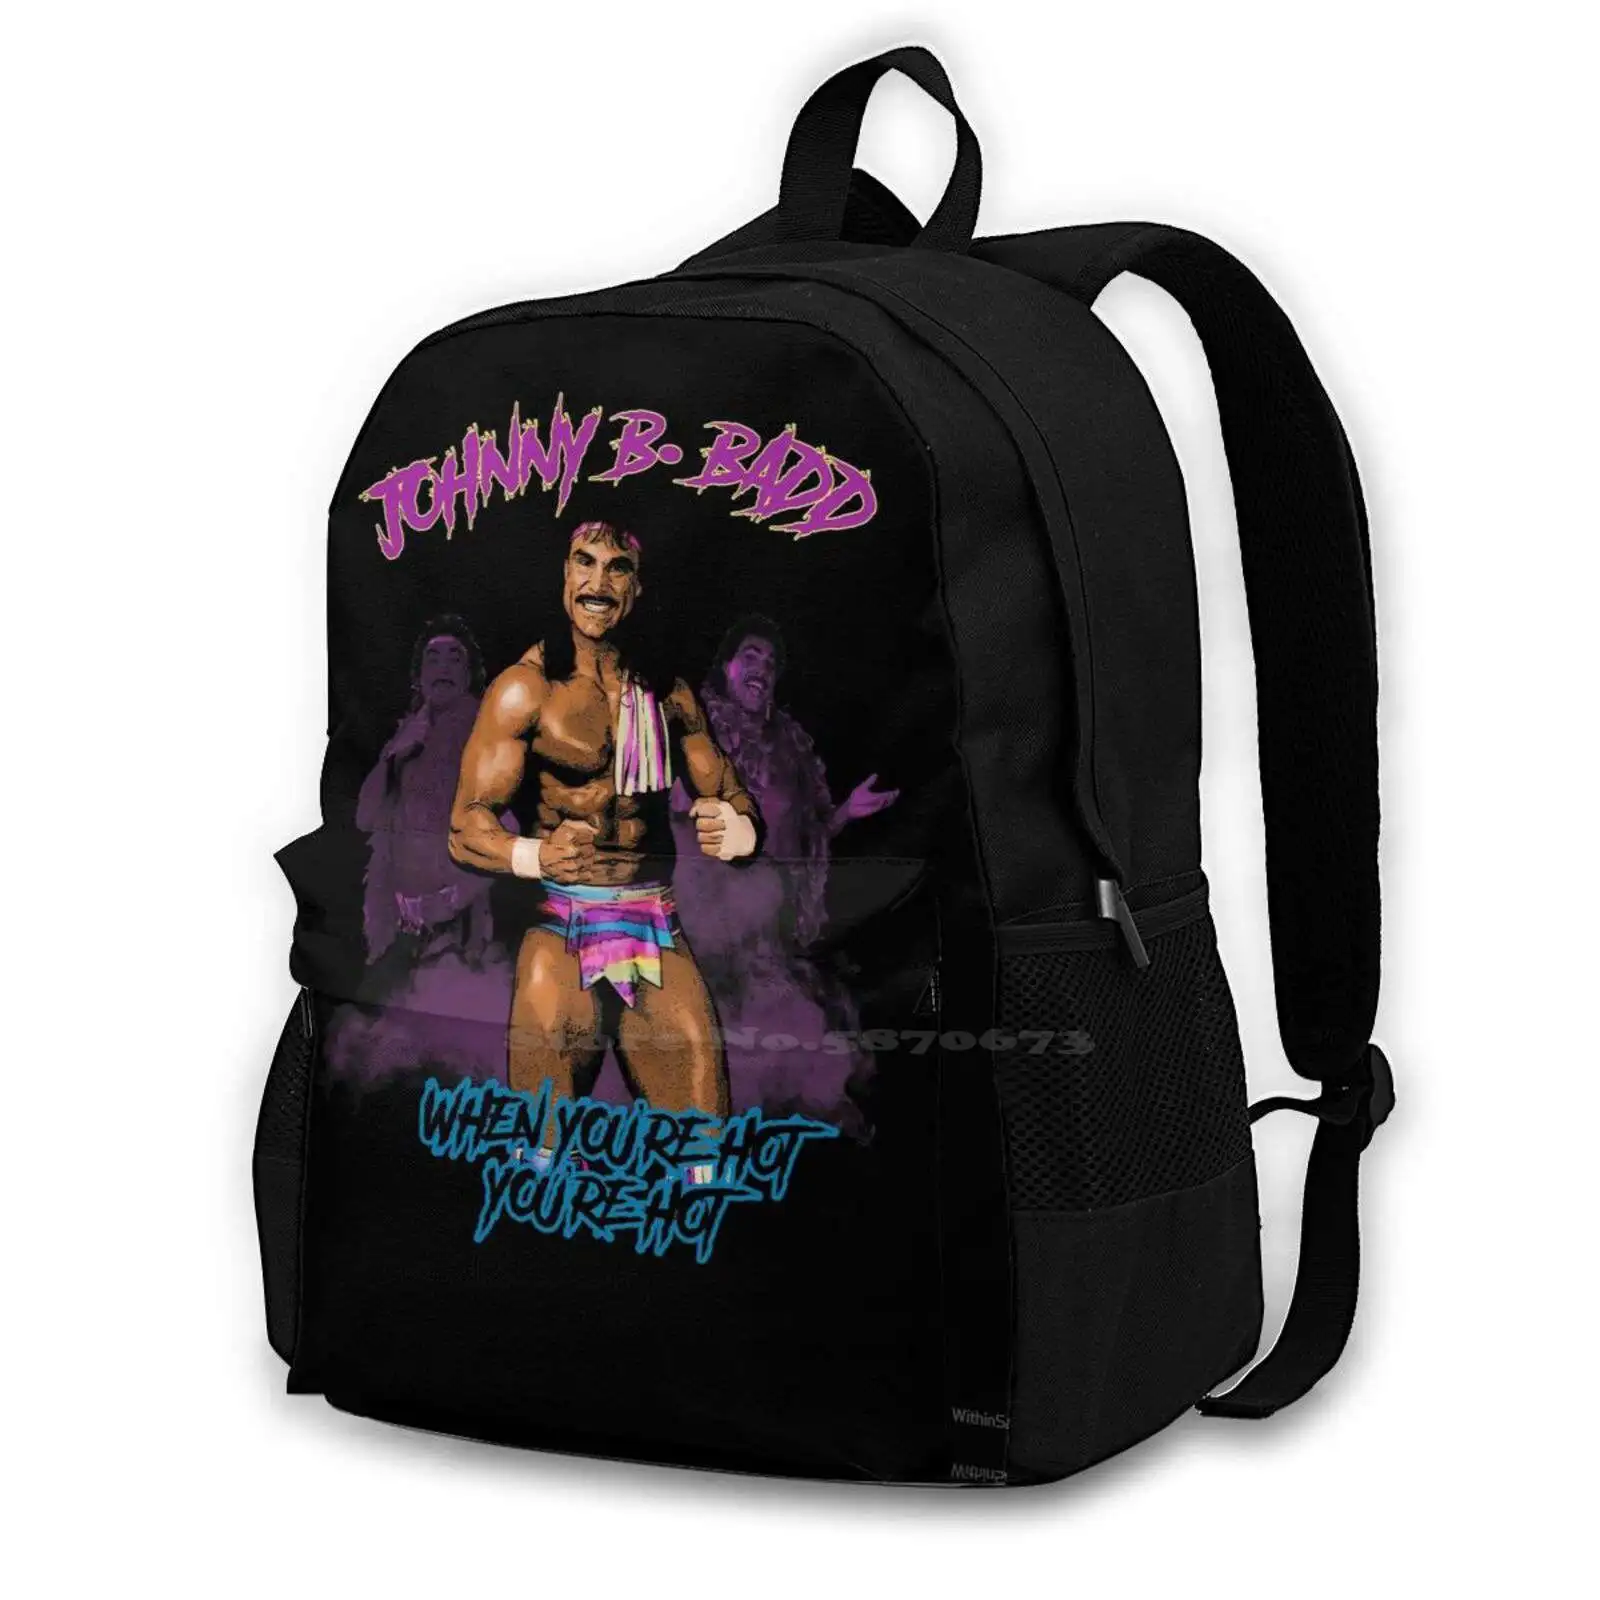 

Johnny B. Badd Teen College Student Backpack Laptop Travel Bags Johnny B Badd Marc Mero Wwf World Championship Wrestling Little